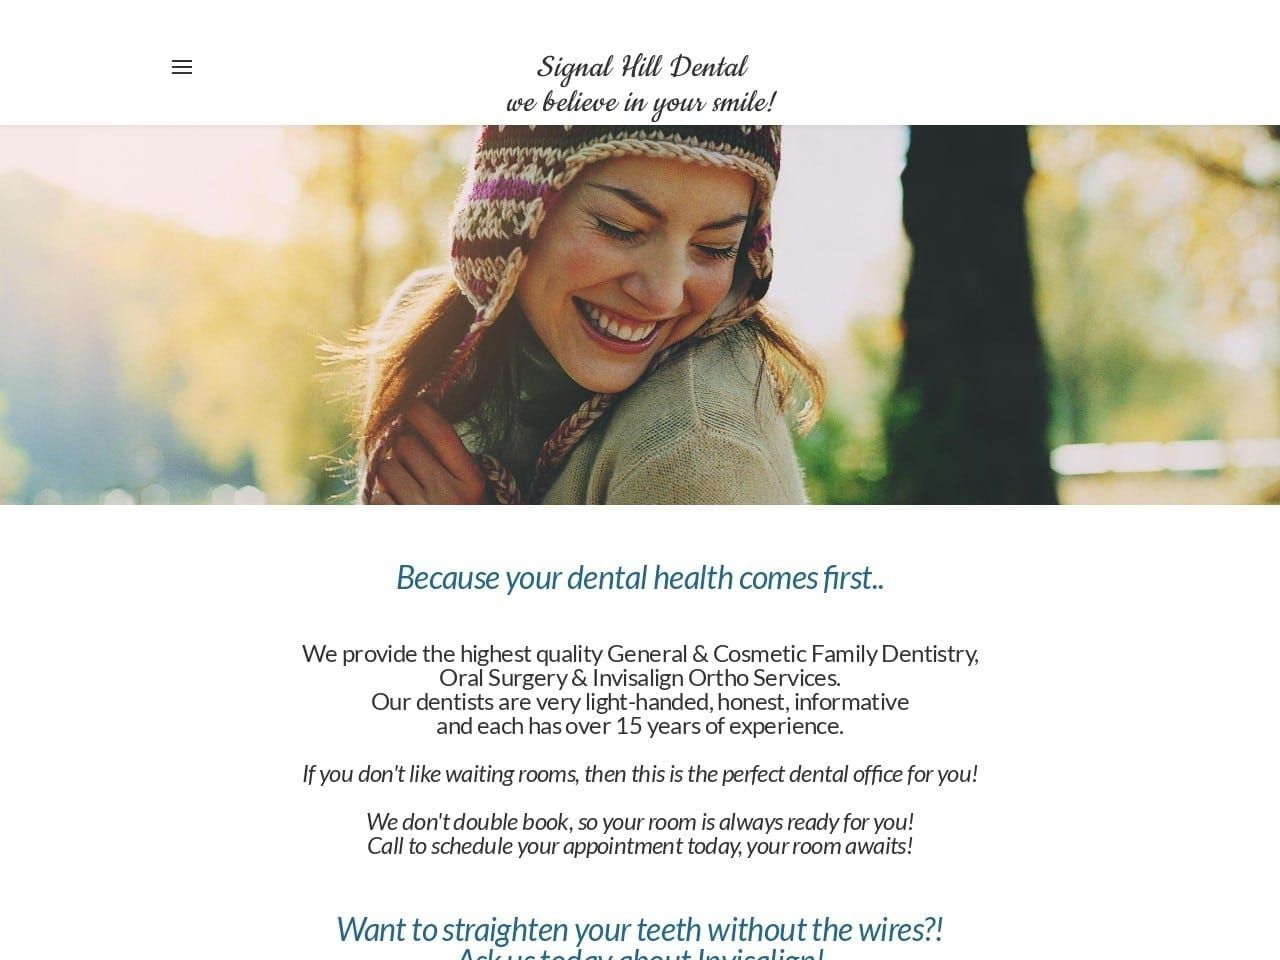 Signal Hill Dental Website Screenshot from signalhilldentalcare.com